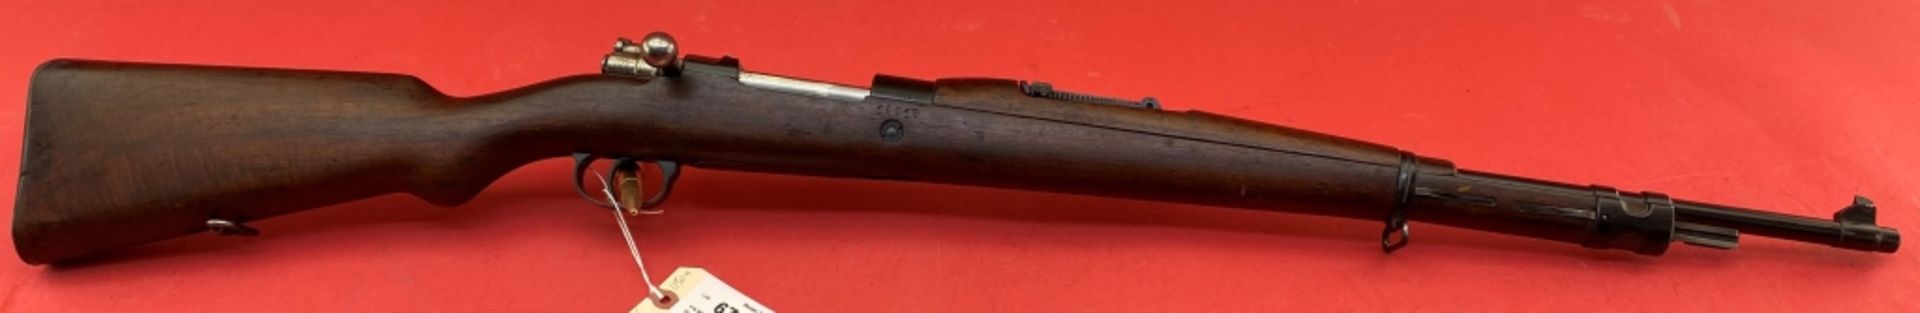 FN M1950 .30-06 Rifle